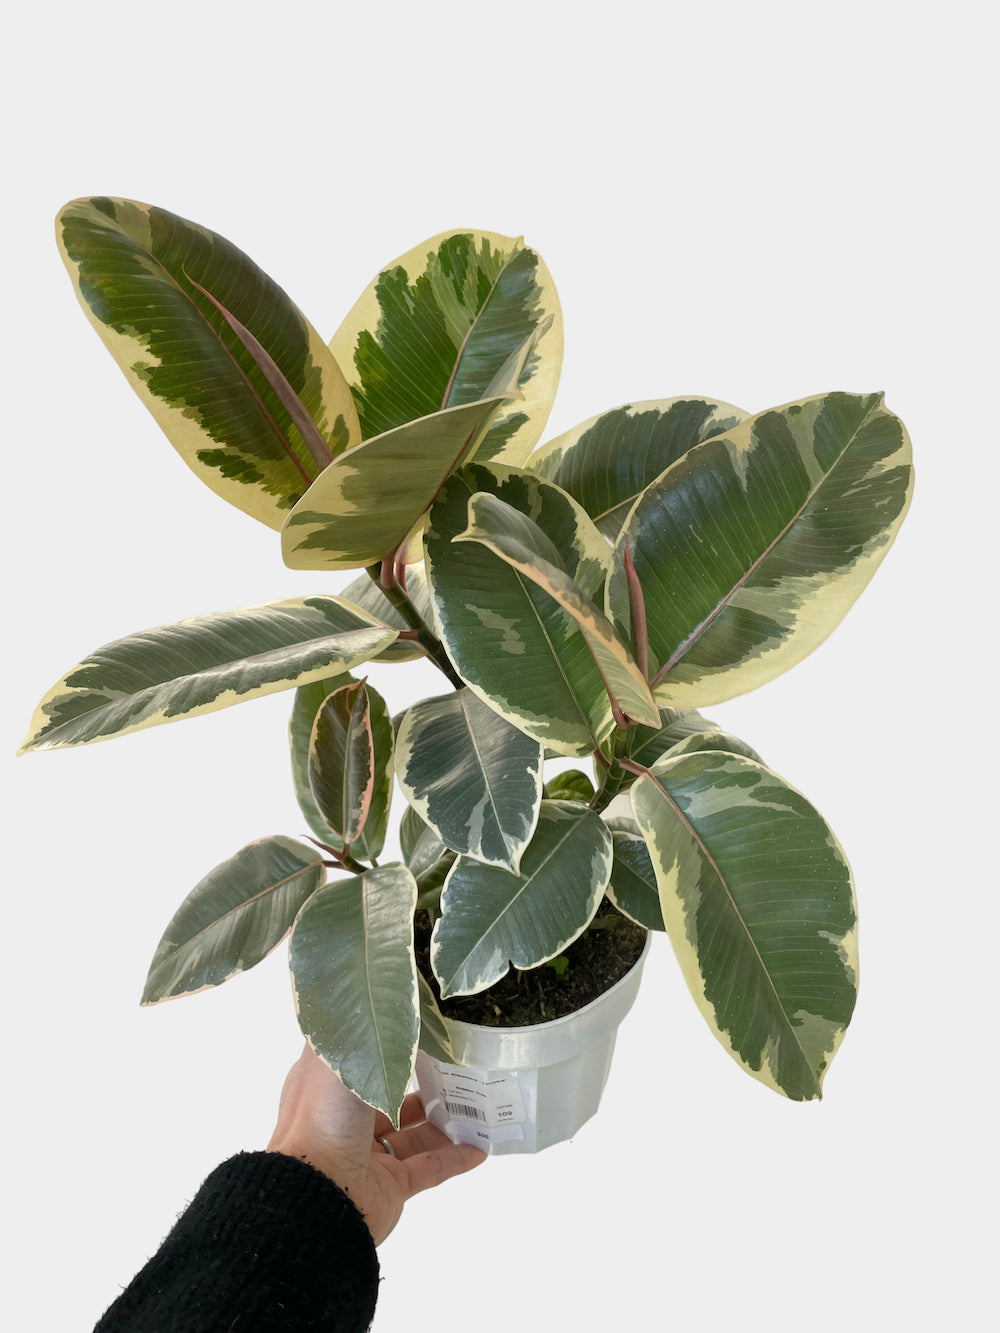 Ficus Elastica Tineke aka Rubber Plant - Bush Form